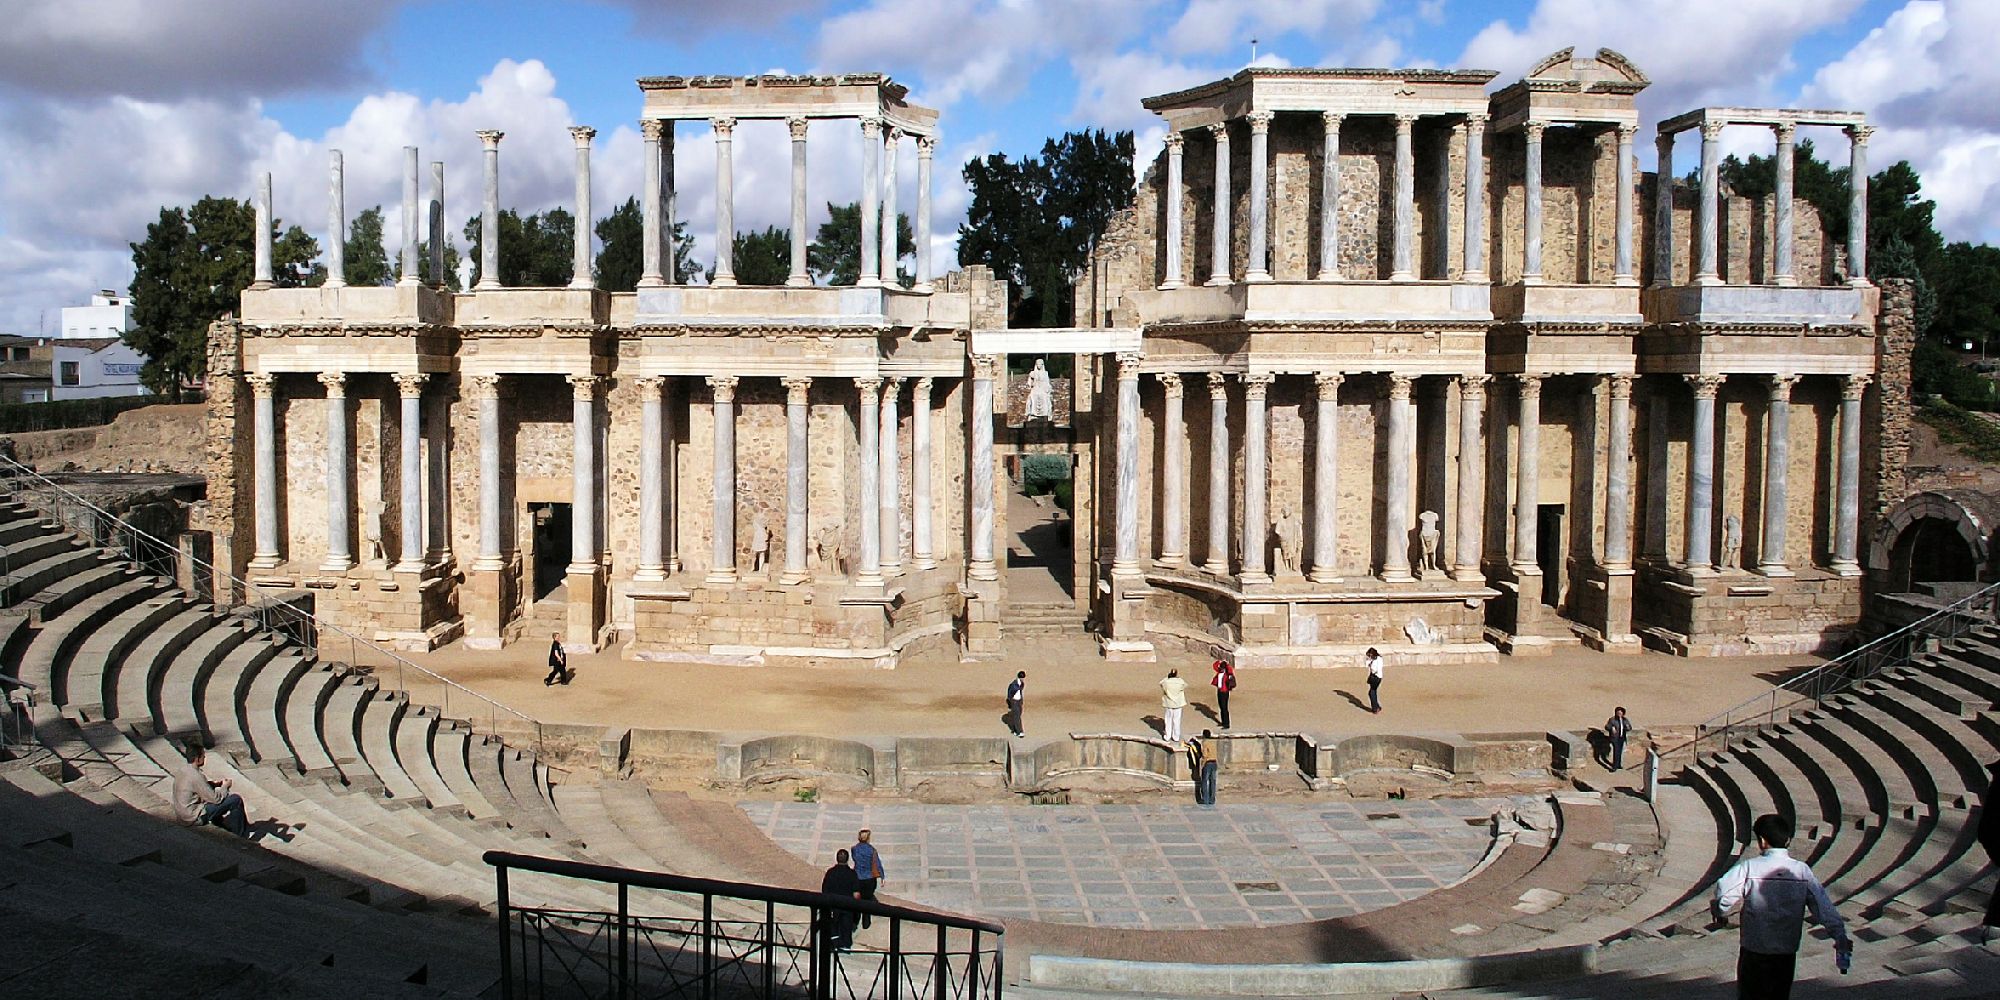 The Roman amphitheatre in Merida, Spain